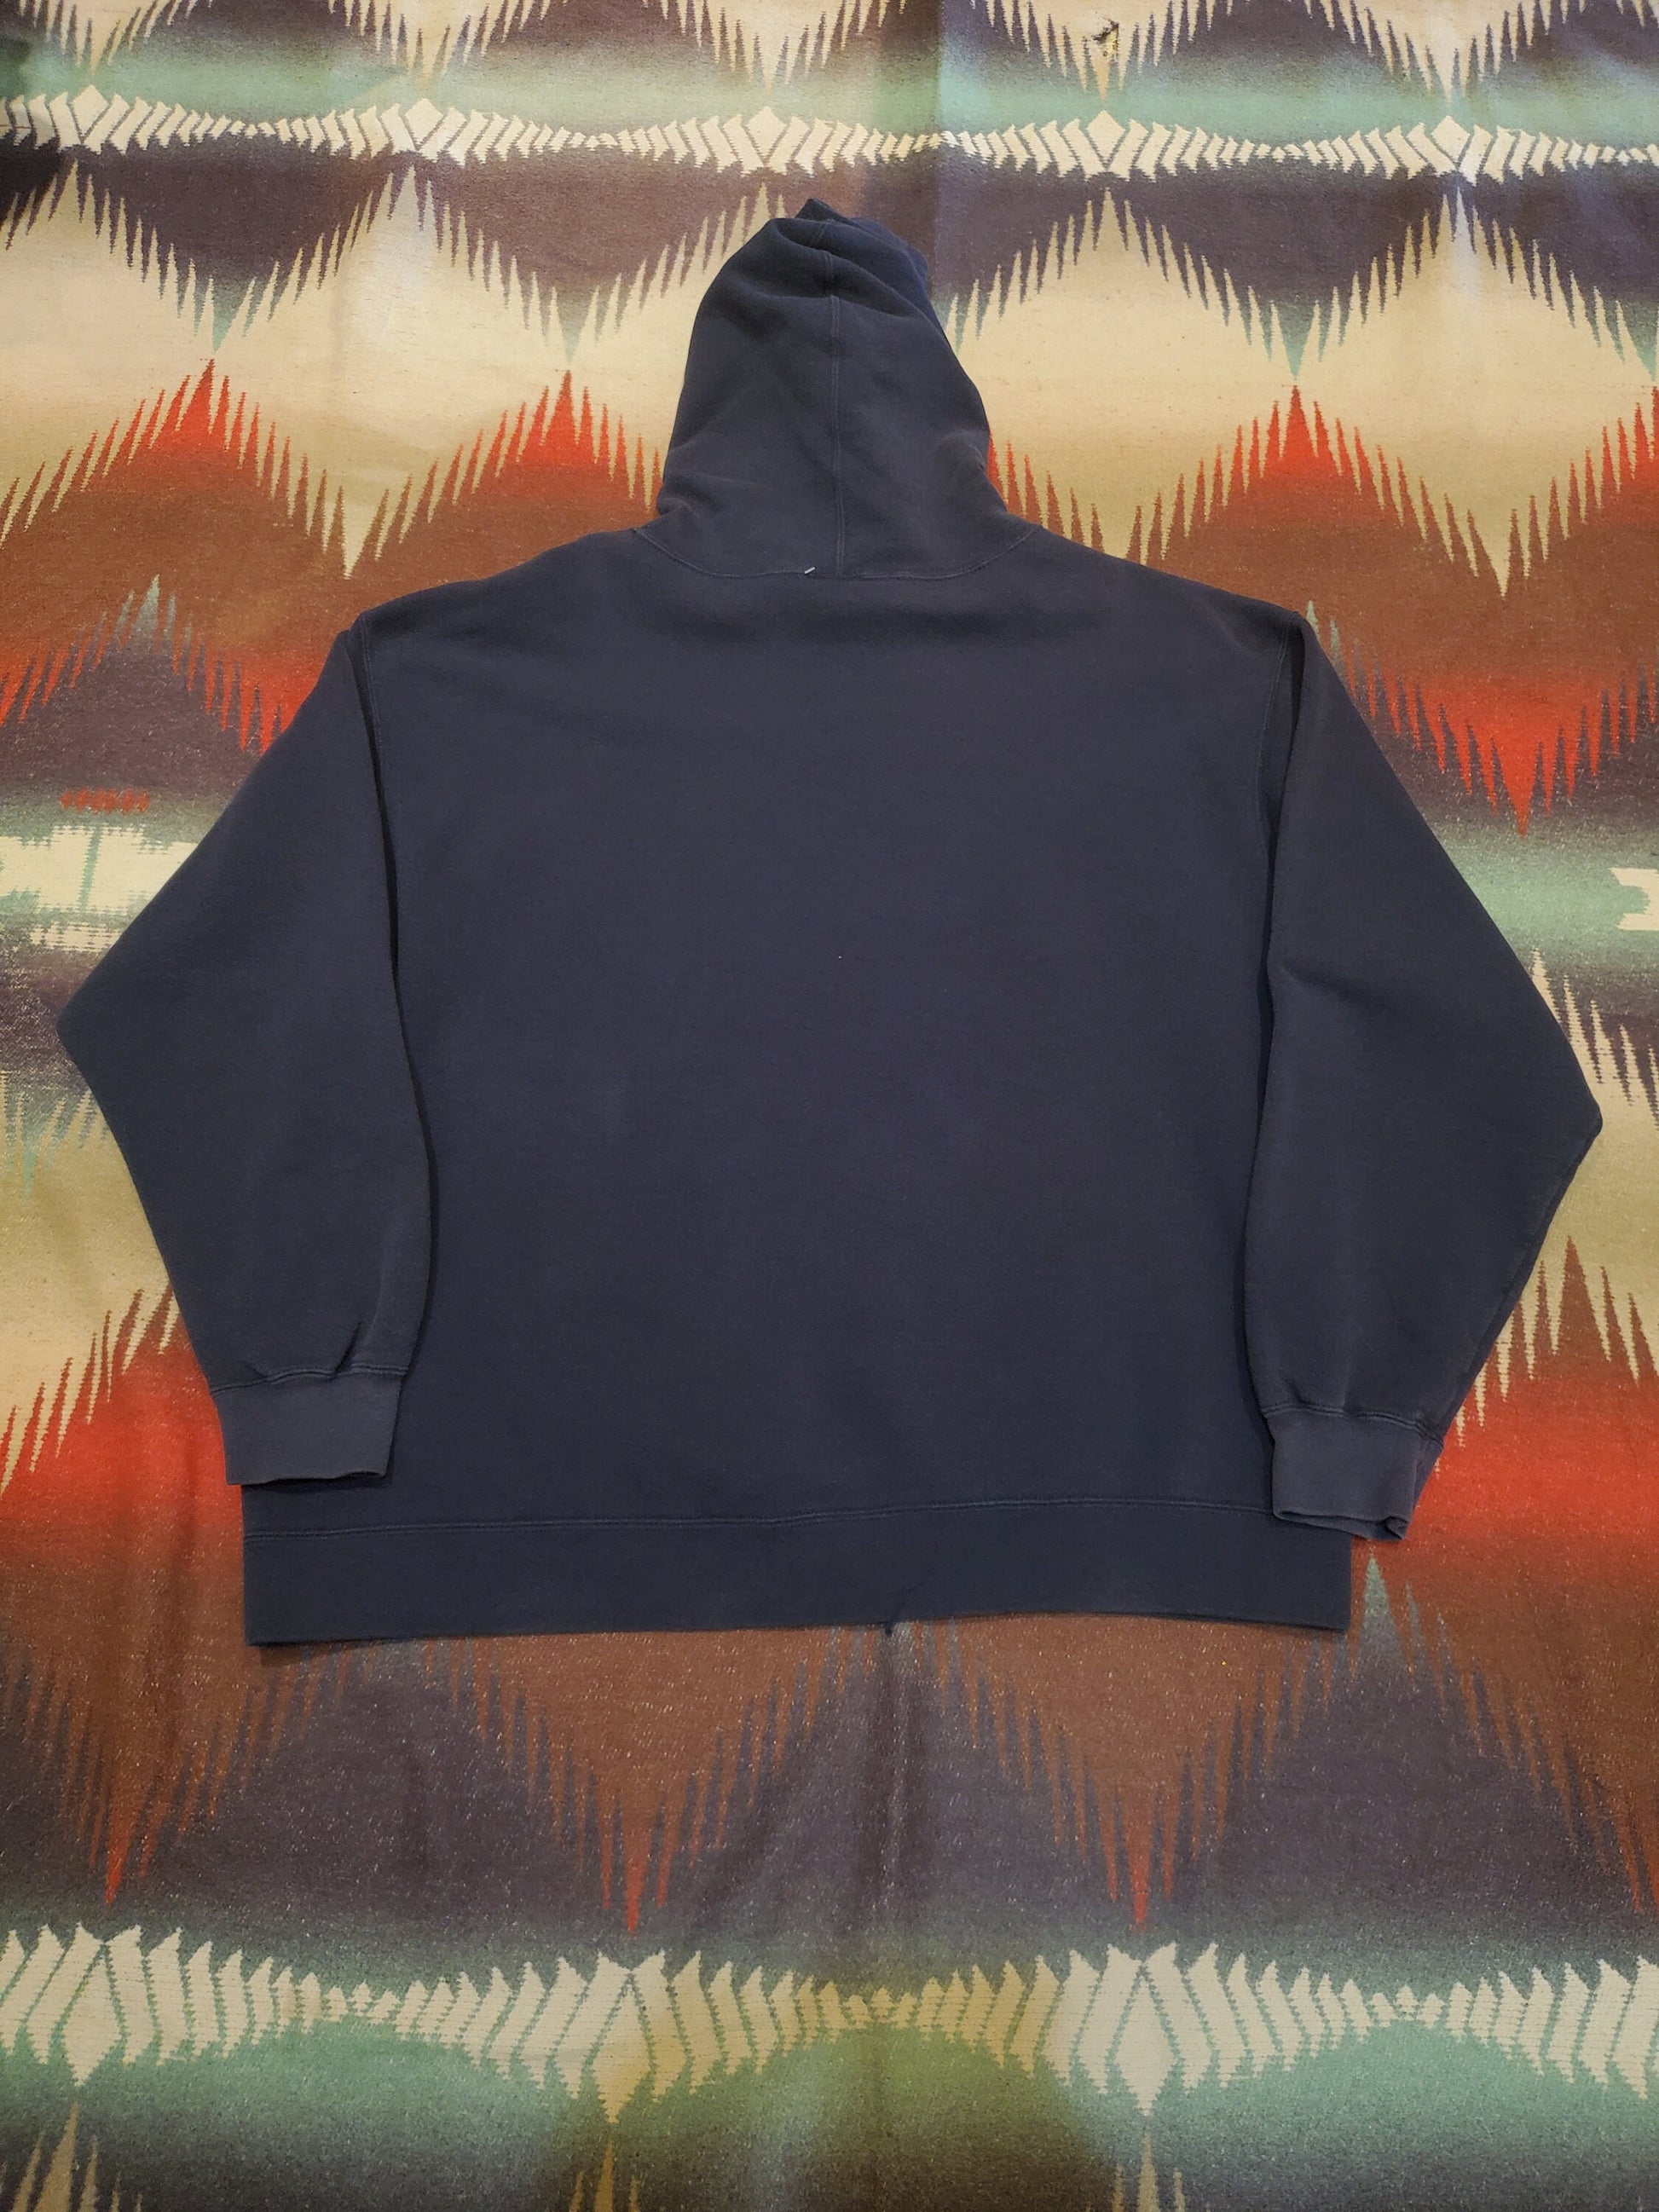 2000s/2010s Prospirit Navy Blue Blank Hoodie Sweatshirt Size XL